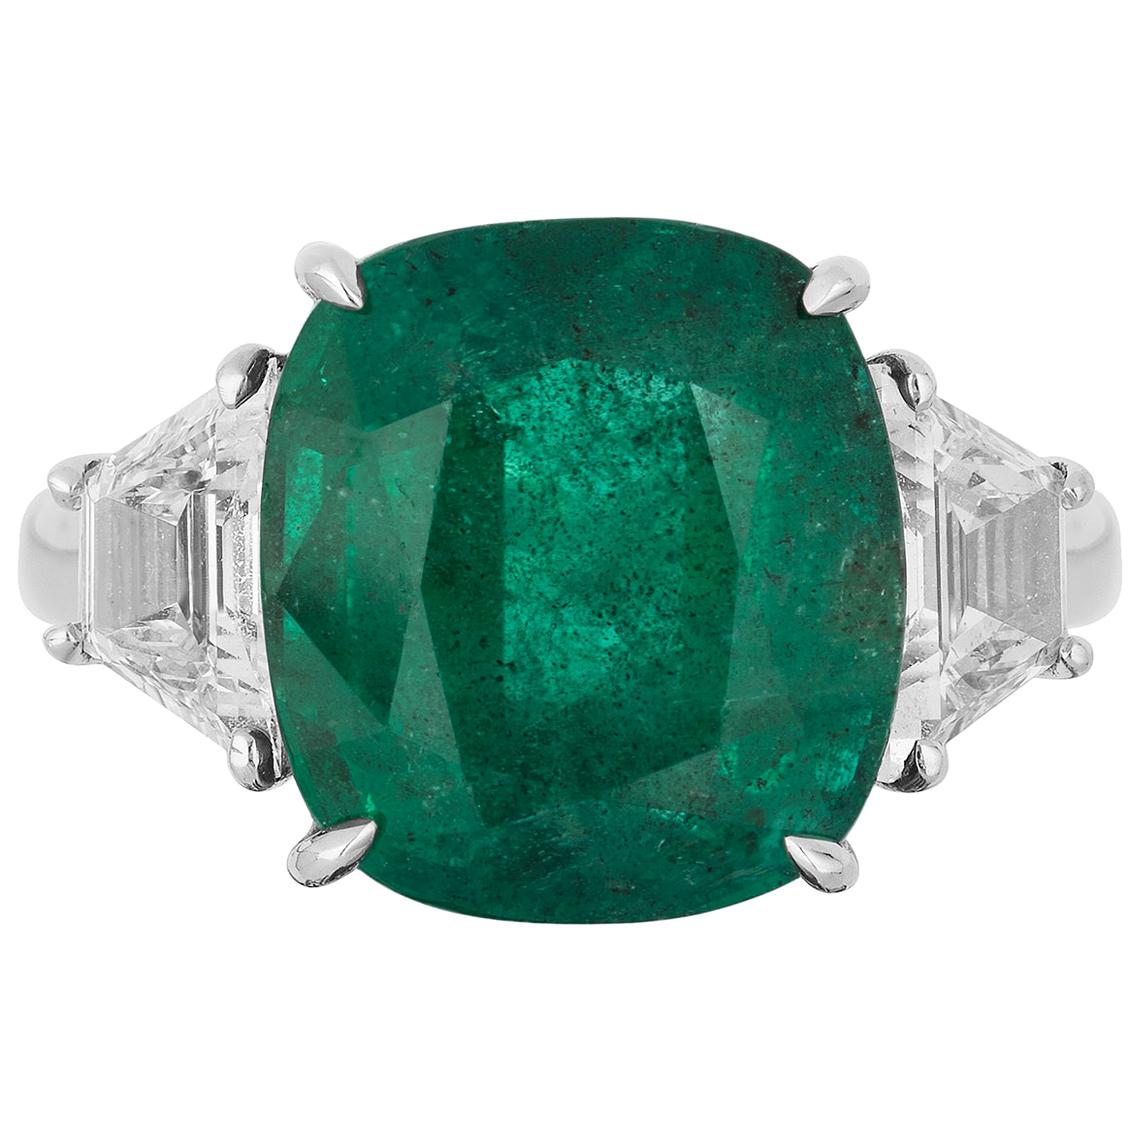 Andreoli 7.99 Carat Emerald CDC Certified Zambian Diamond Ring 18 Karat